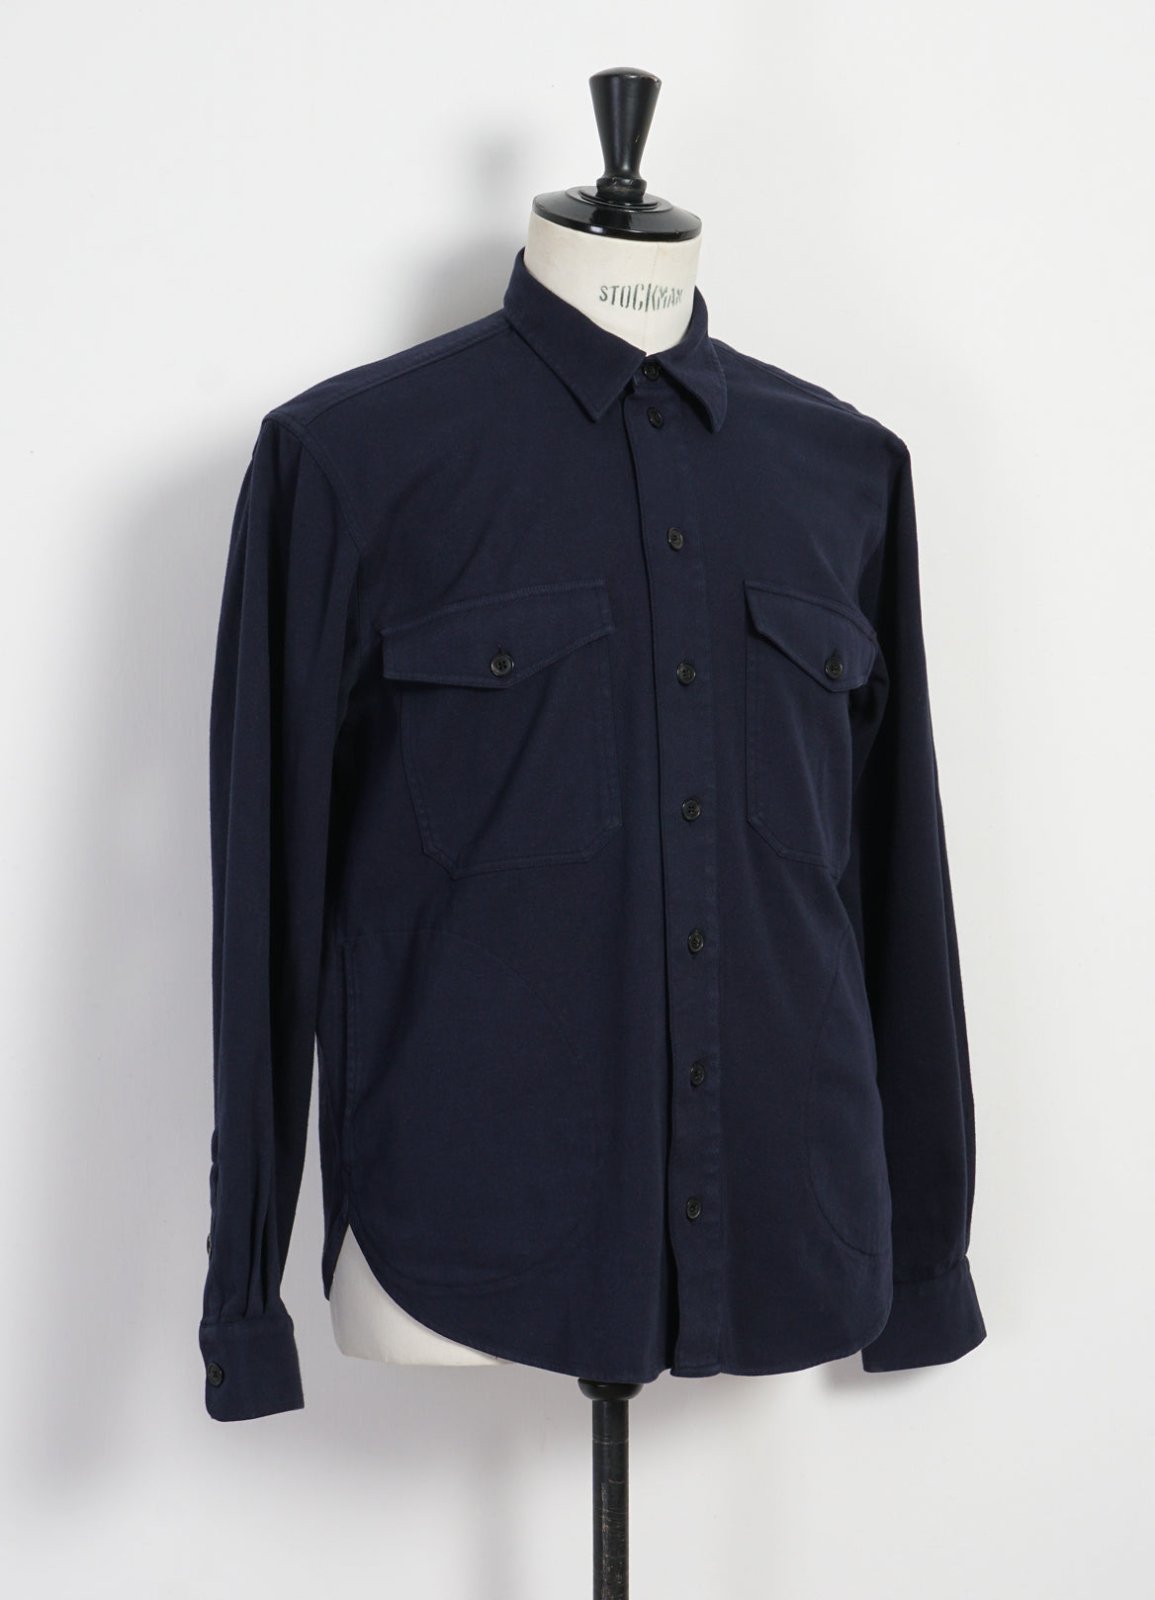 HANSEN GARMENTS - RUBEN | Casual Over Shirt | Navy - HANSEN Garments